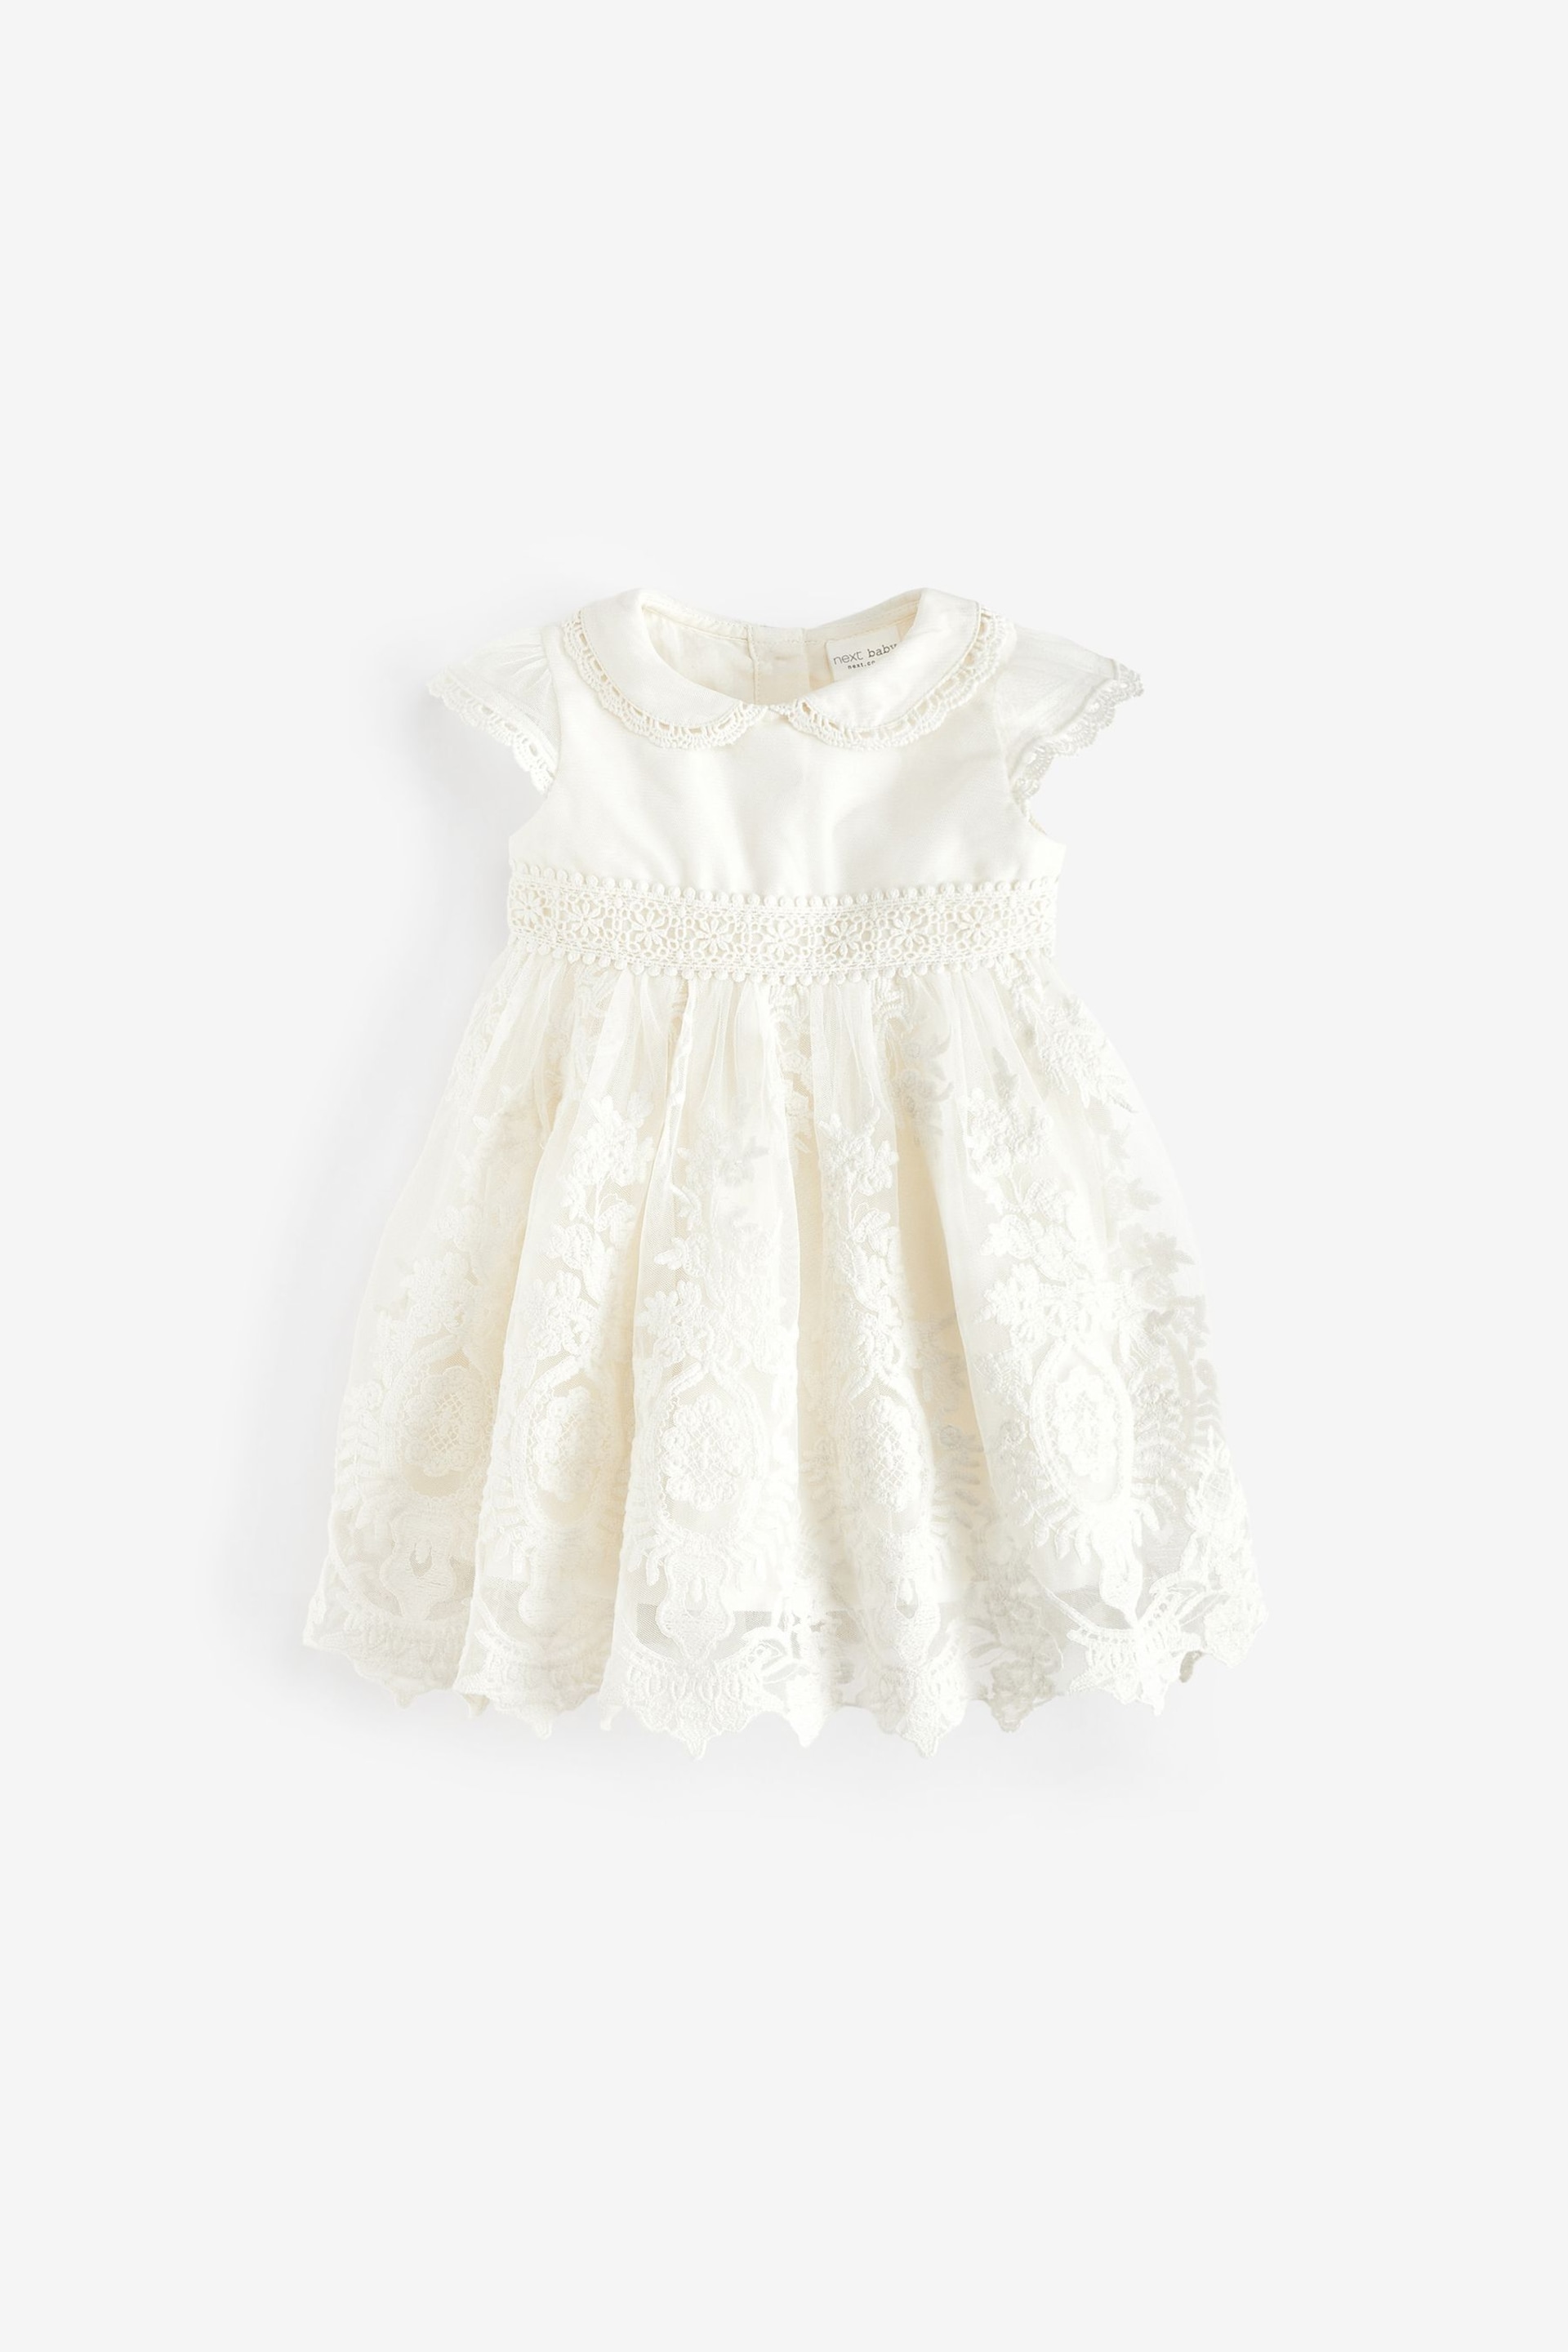 White Short Length Baby Christening Dress (0mths-2yrs) - Image 1 of 3